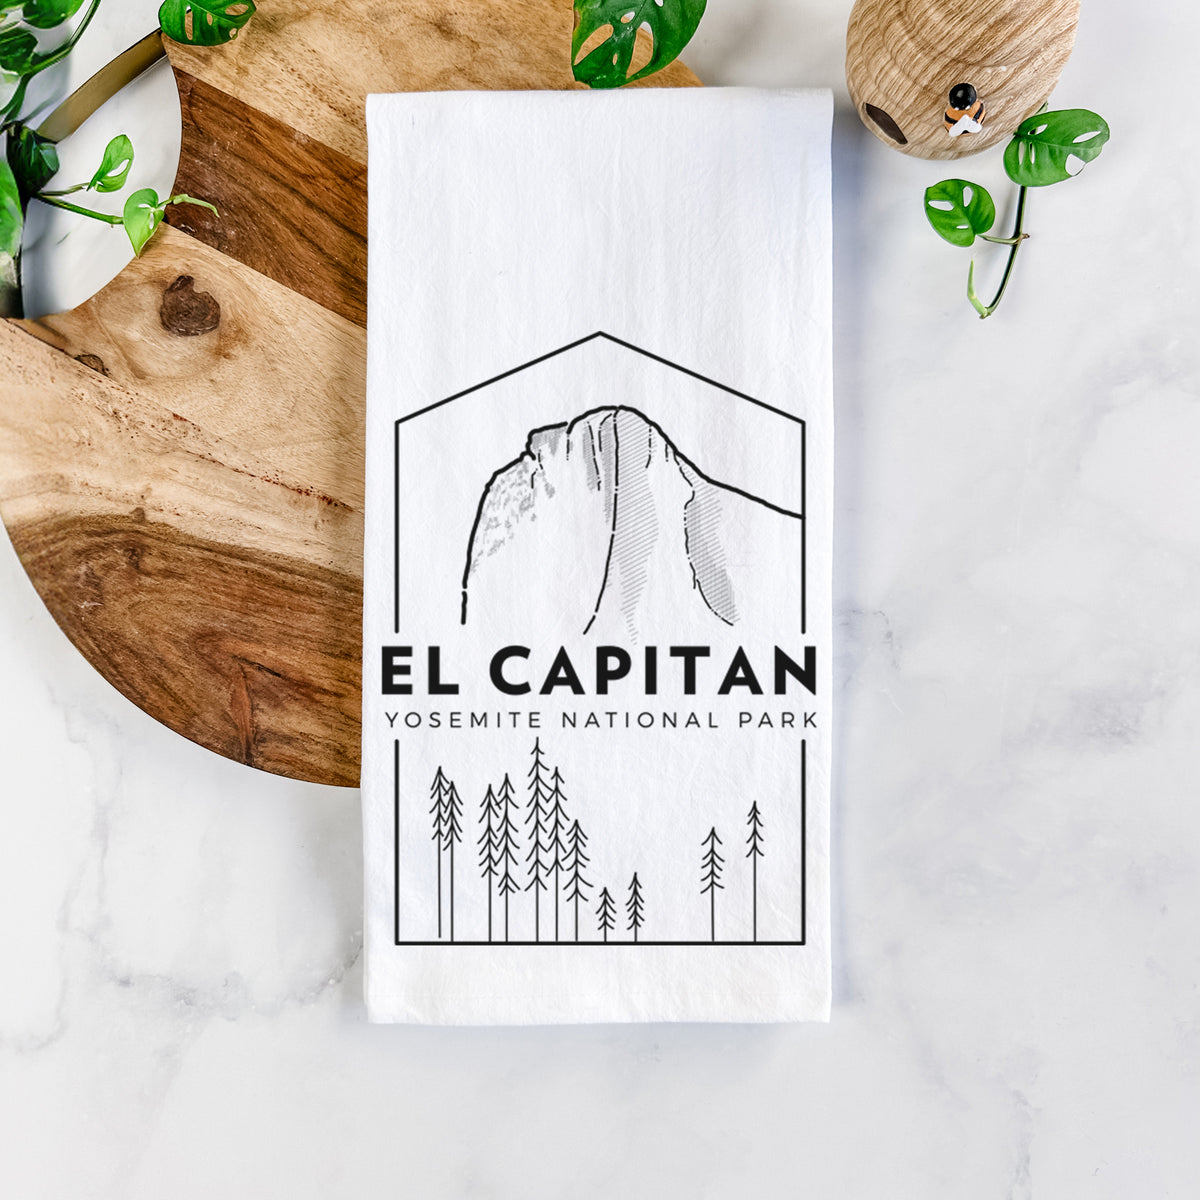 El Capitan - Yosemite National Park Tea Towel